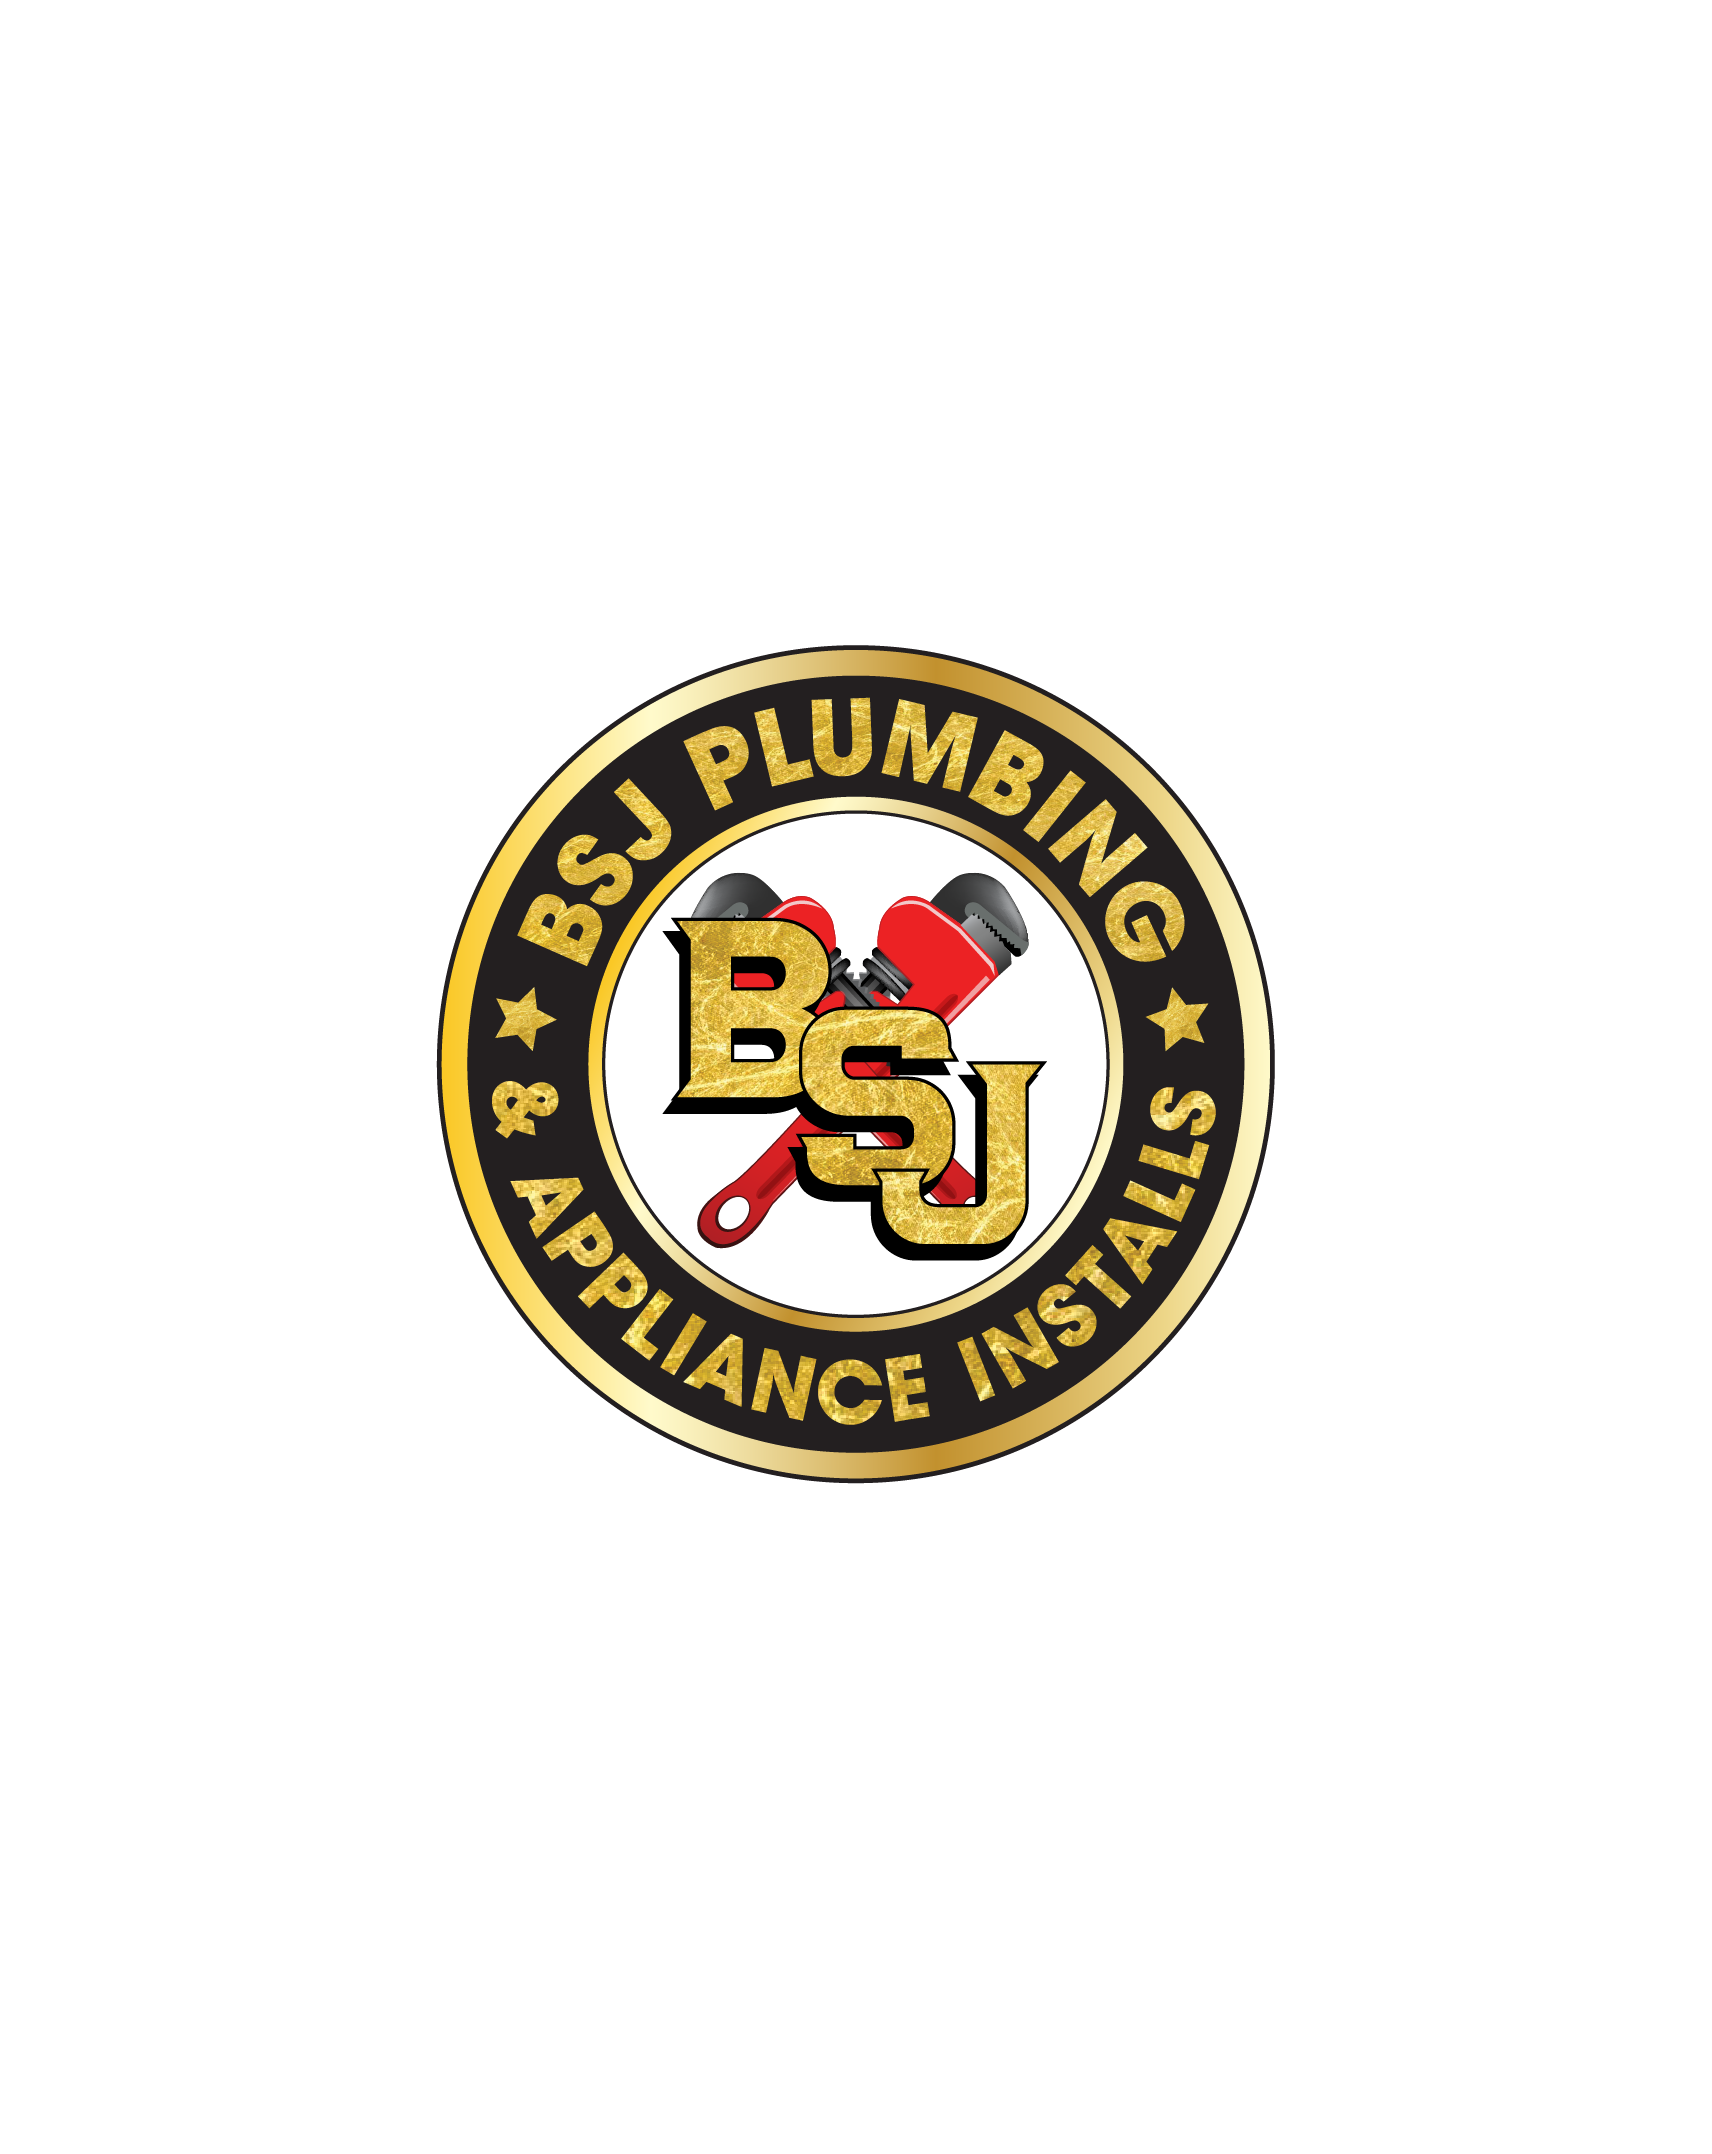 BSJ Plumbing, LLC Logo